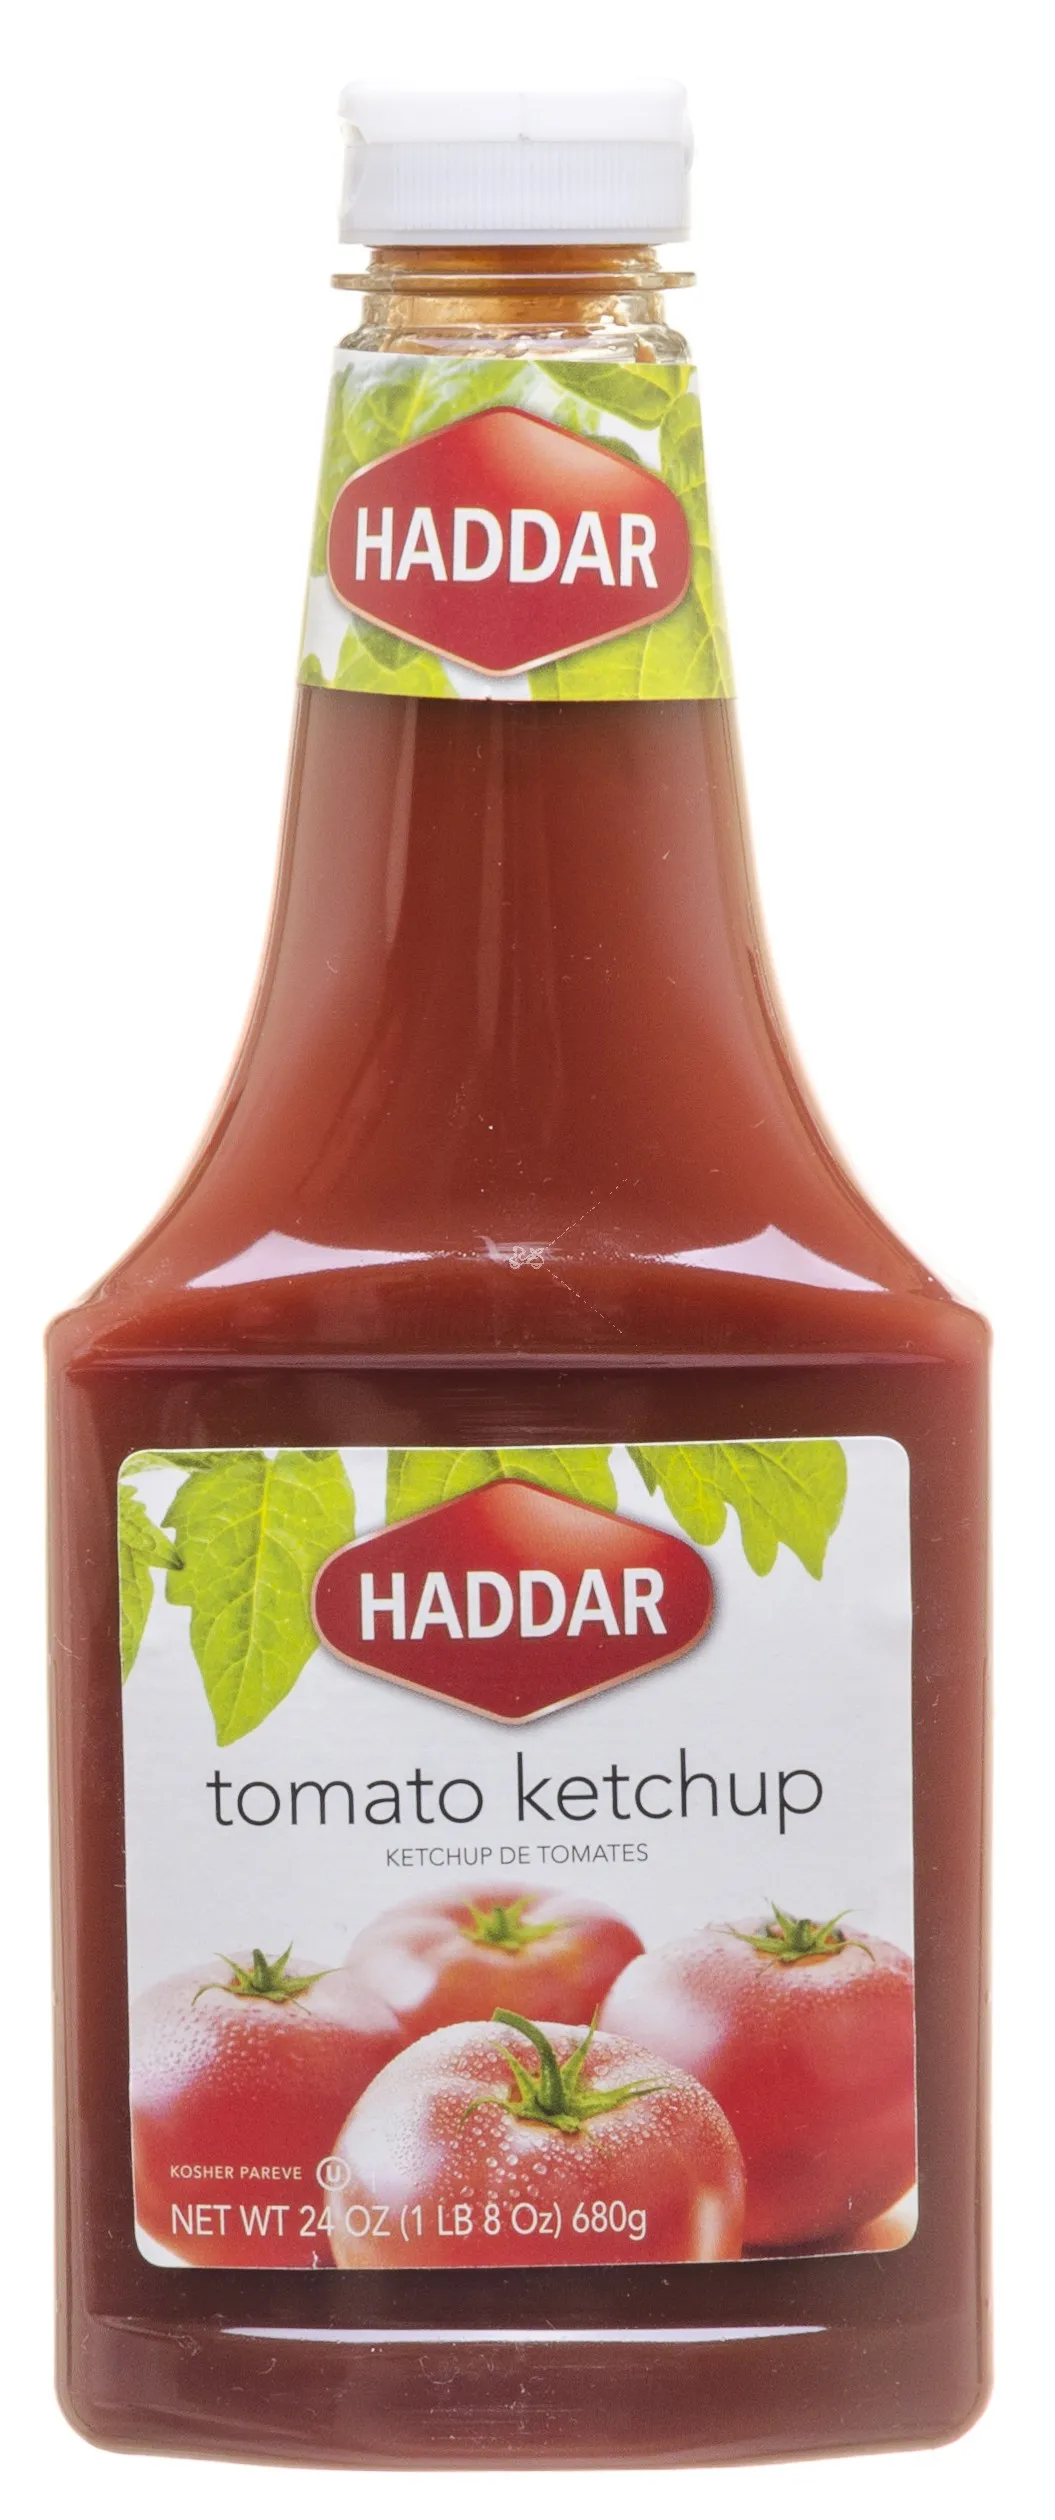 Haddar tomato ketchup 24 oz